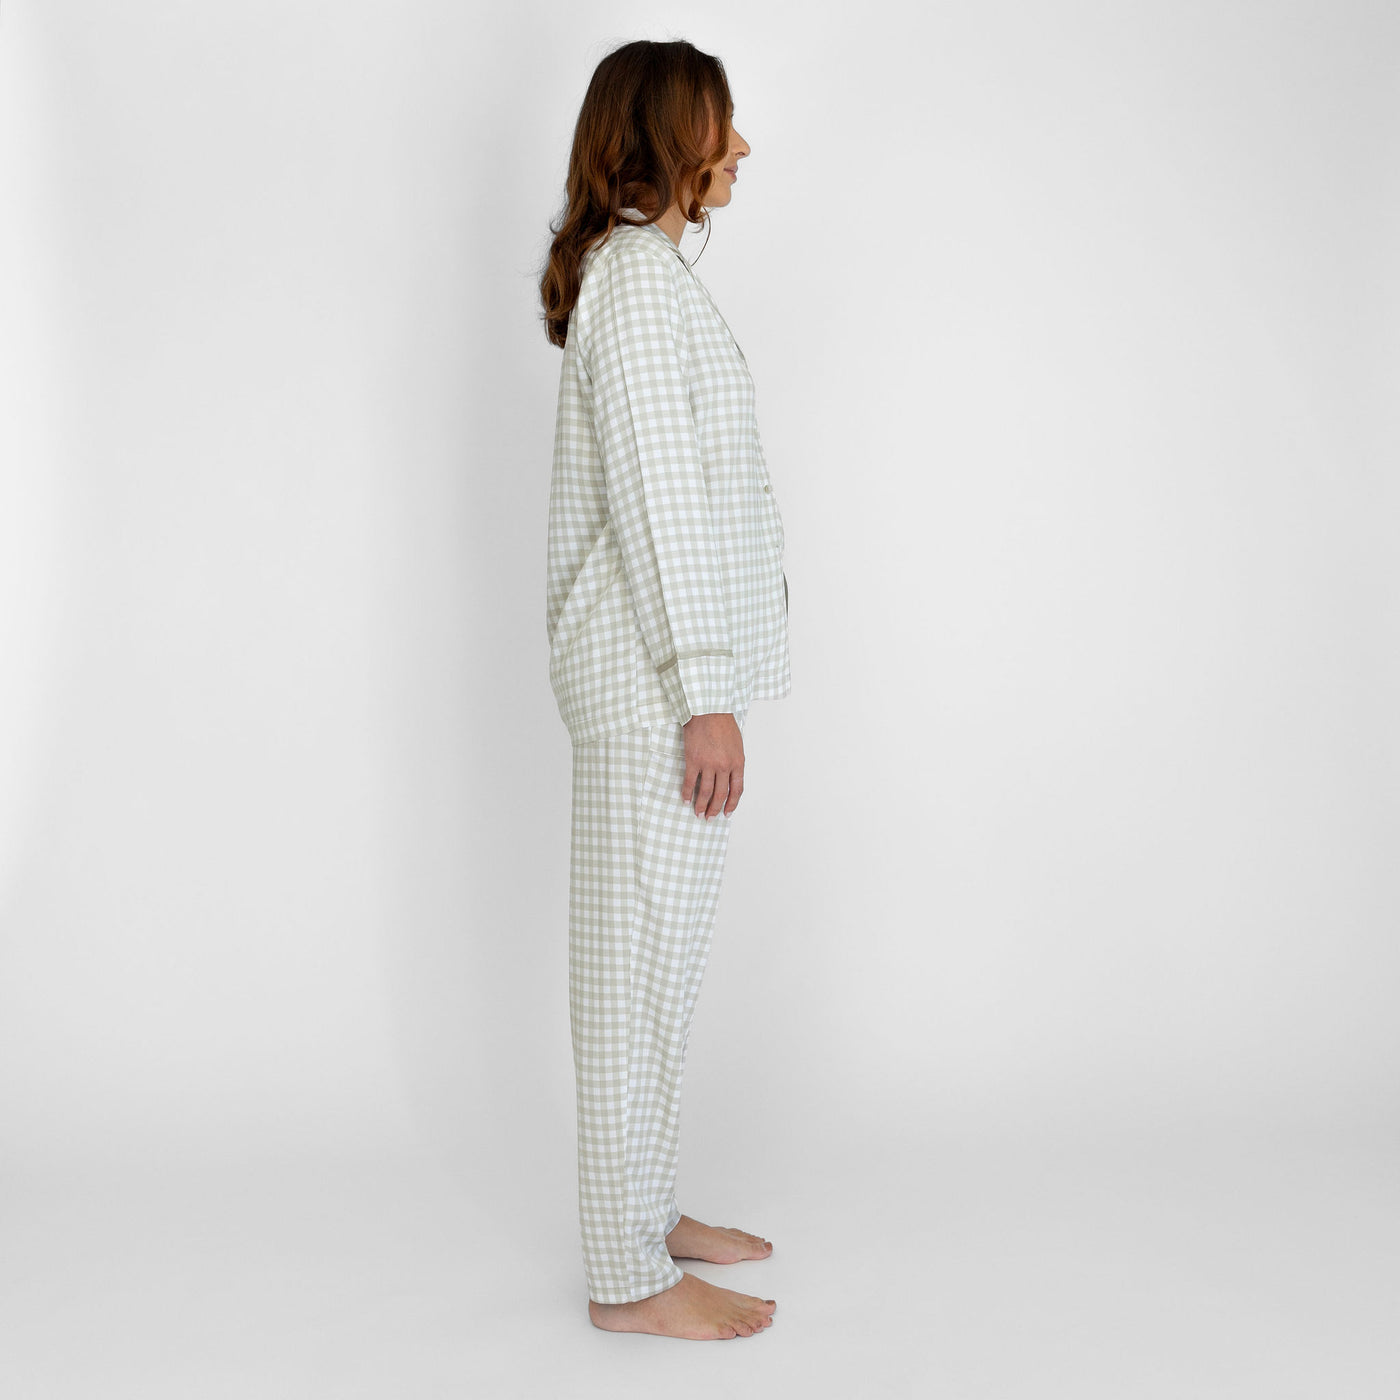 Maree Bamboo Long Sleeve Shirt - Olive Gingham